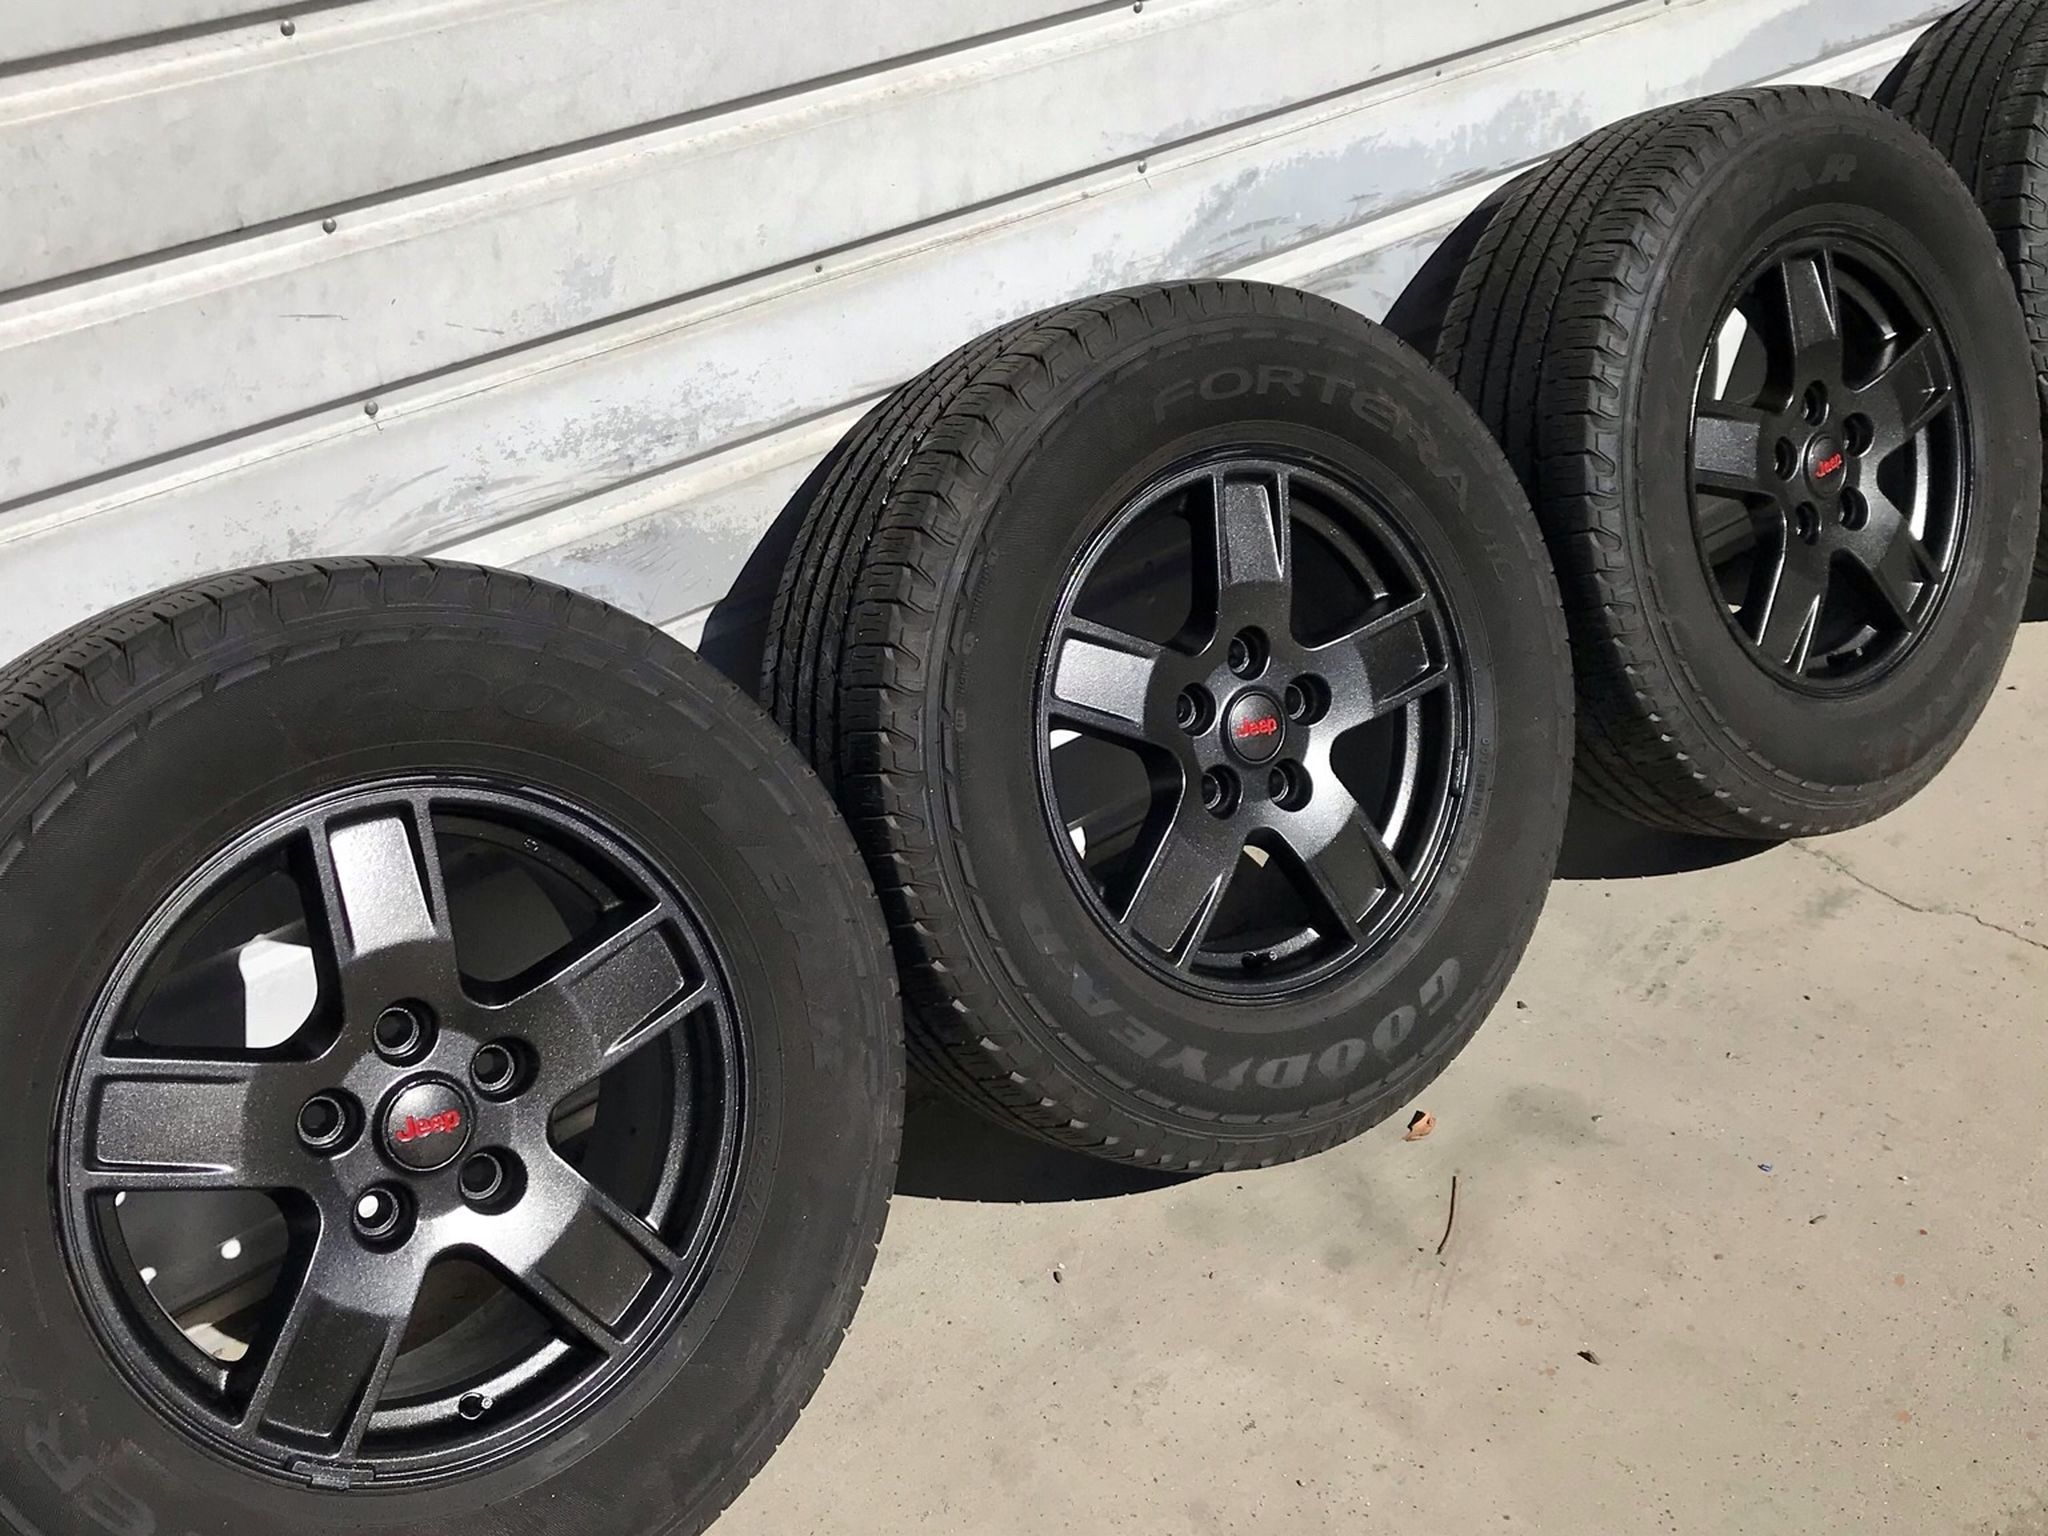 4 Jeep Wrangler 17” Stock Black Wheels OEM Rims Goodyear Fortera 245/70R17 Tires At 40% Tread Balanced 5 on 4.5” Bolt Pattern $325 Ontario 91762 Good